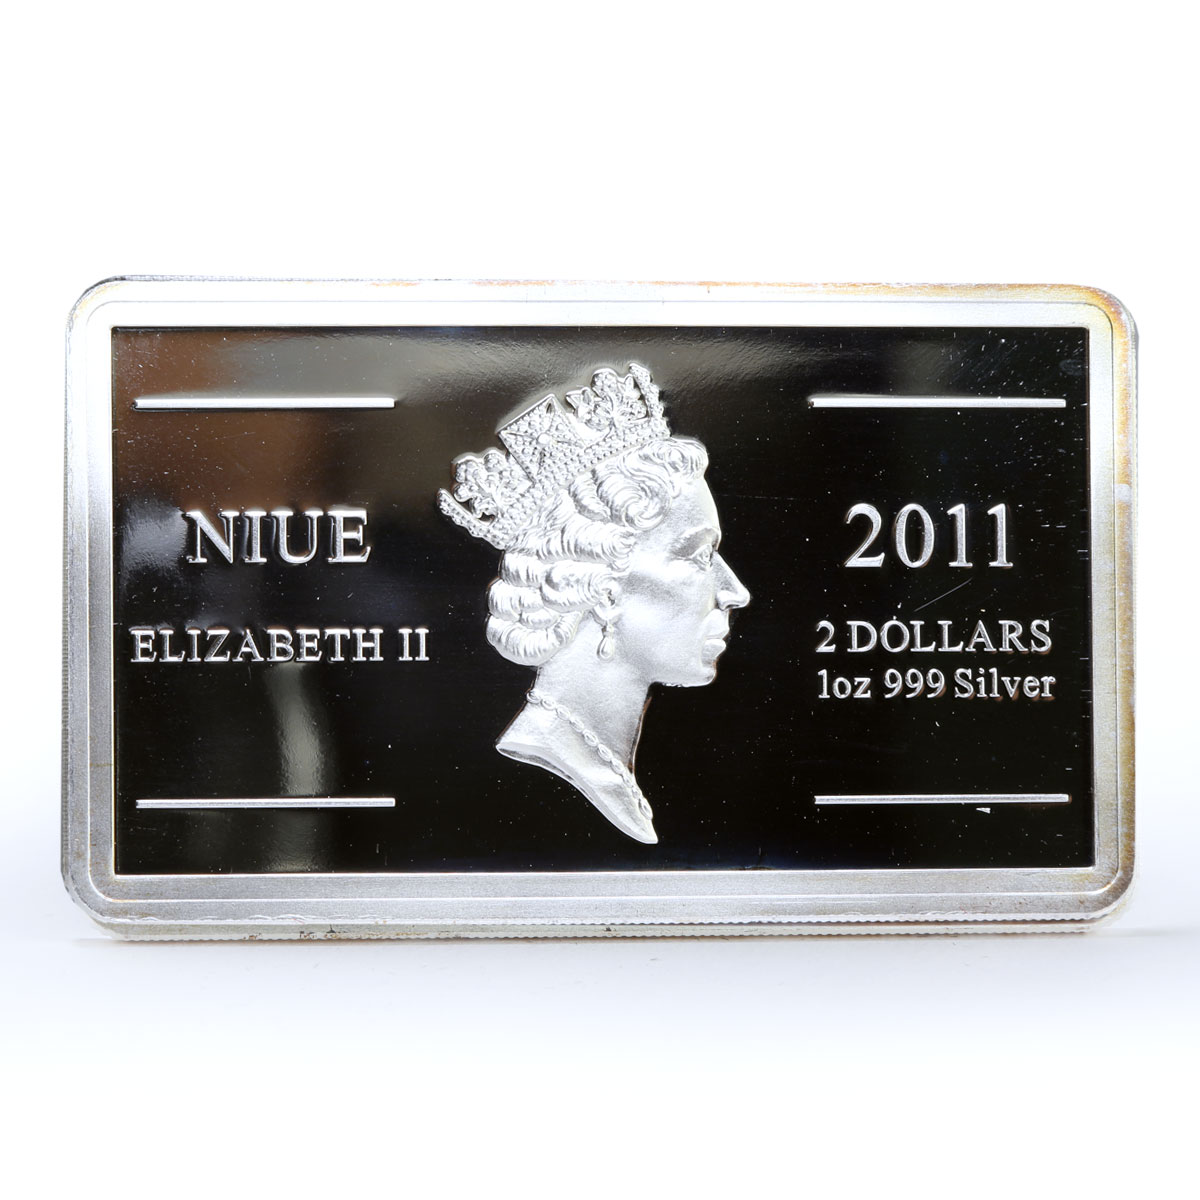 Niue 2 dollars Conquest Space First Man in Space Juri Gagarin silver coin 2011